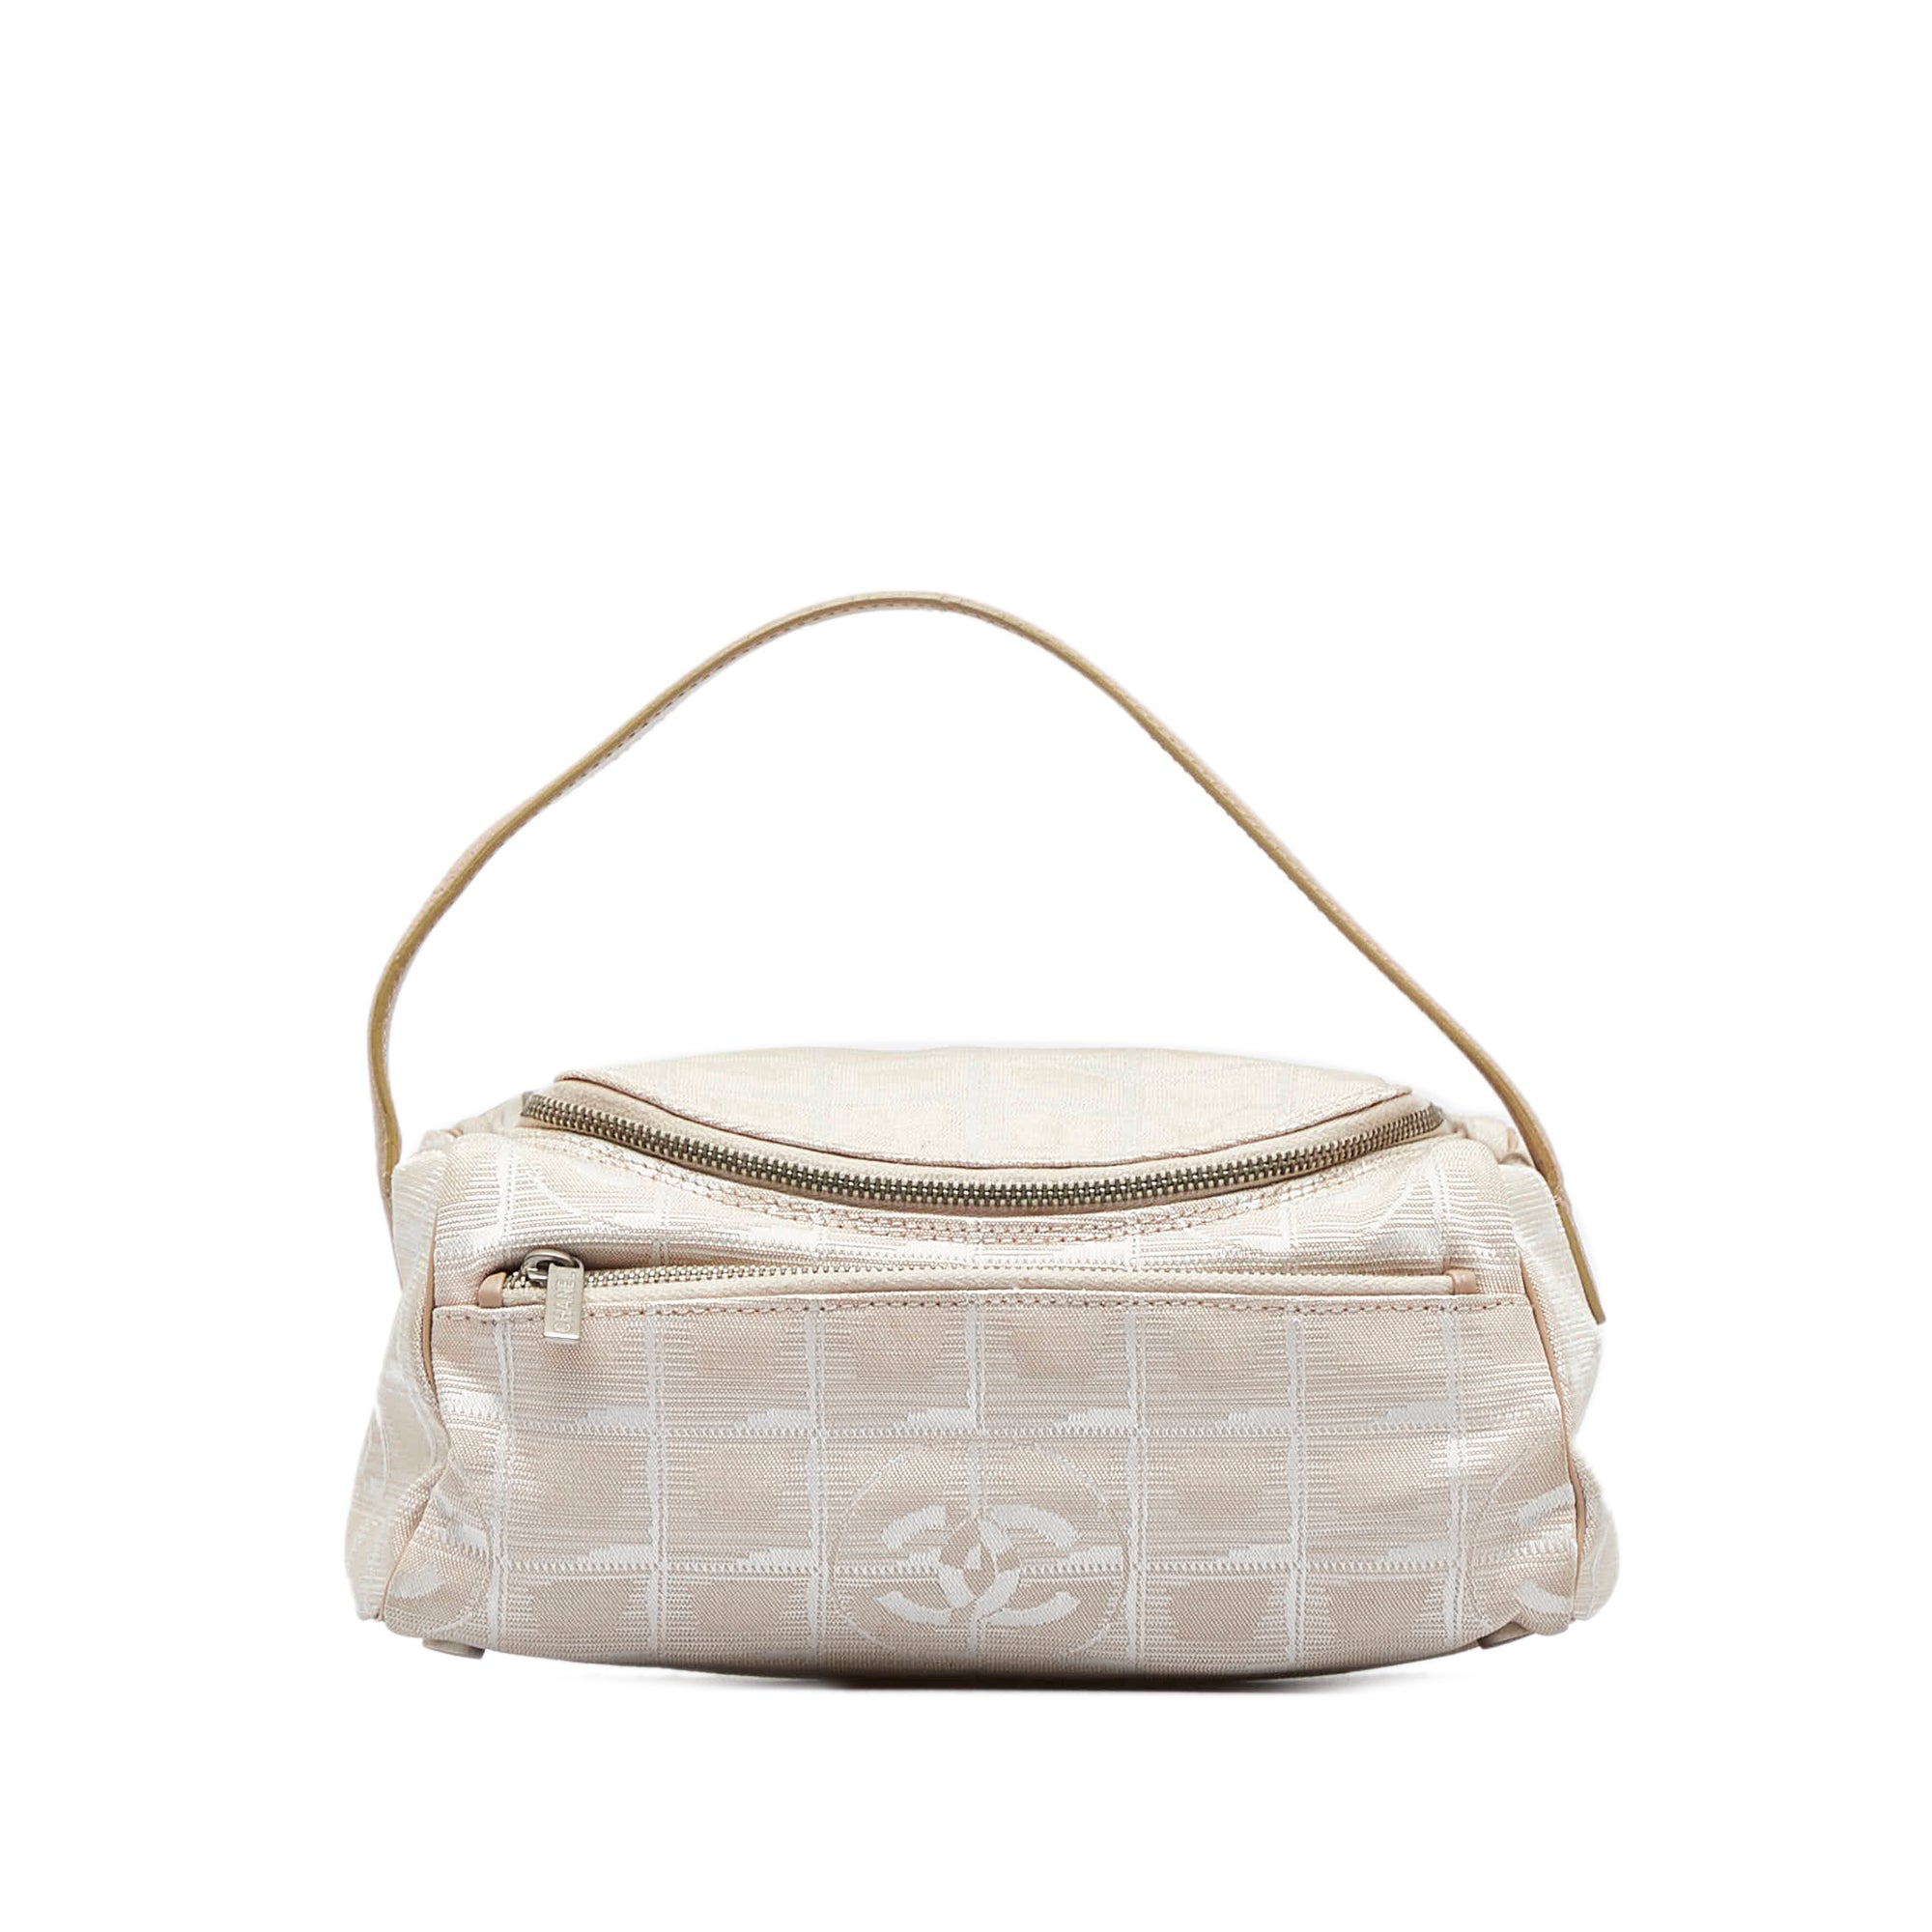 Chanel Chanel Travel Line Beige Jacquard Nylon Large Tote Bag